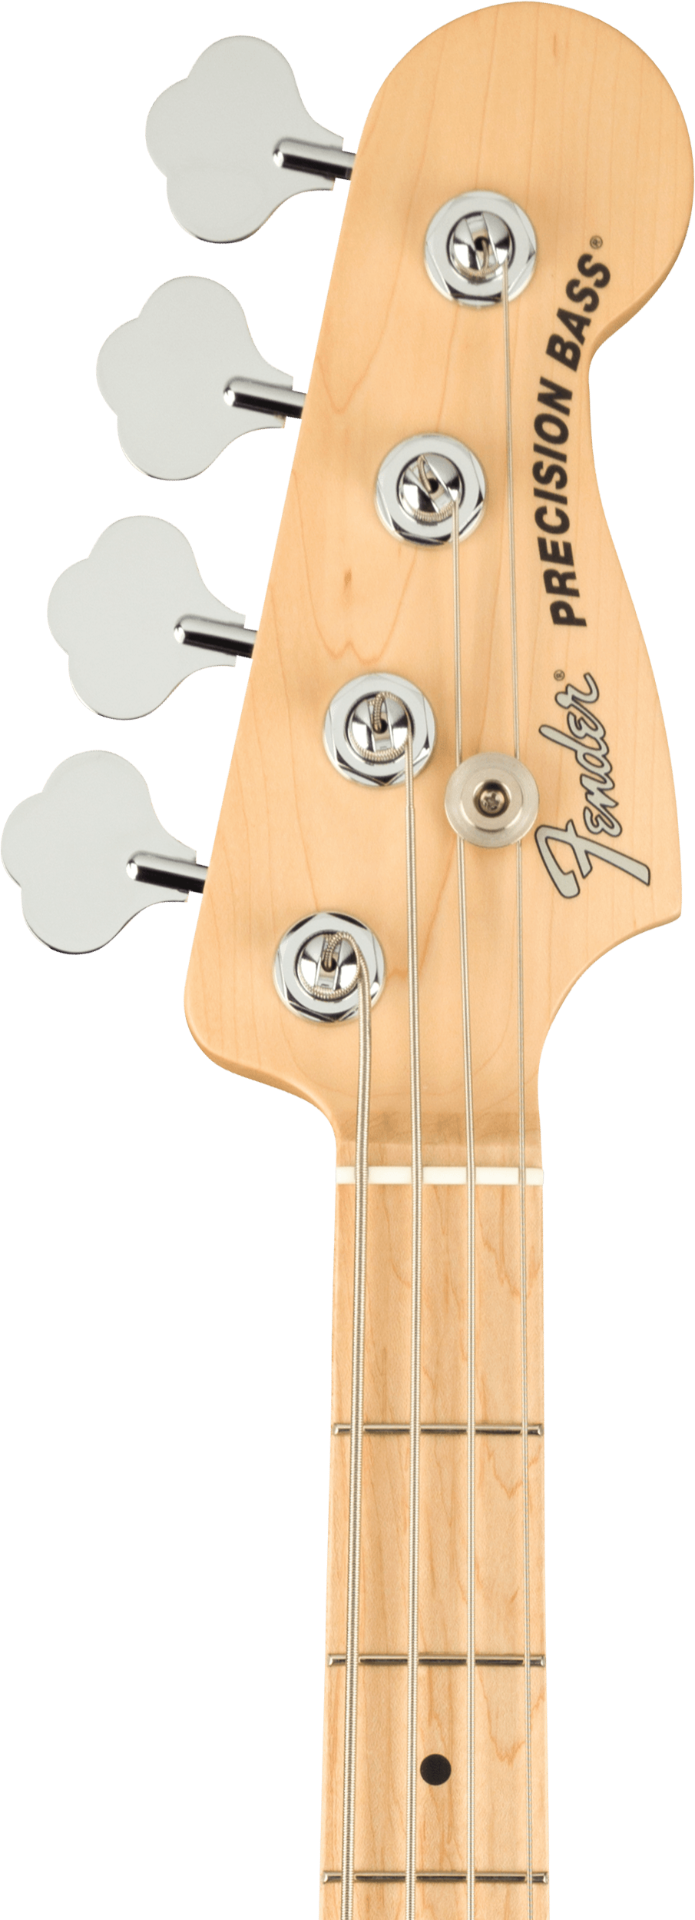 Fender American Performer Precision Bass - Satin Lake Placid Blue w/ Case